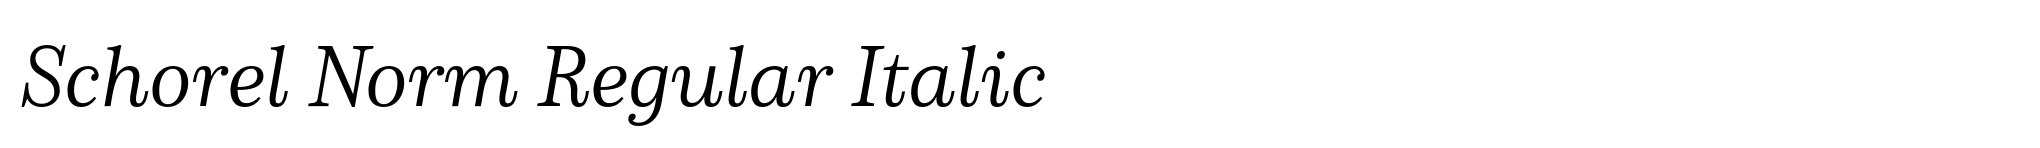 Schorel Norm Regular Italic image